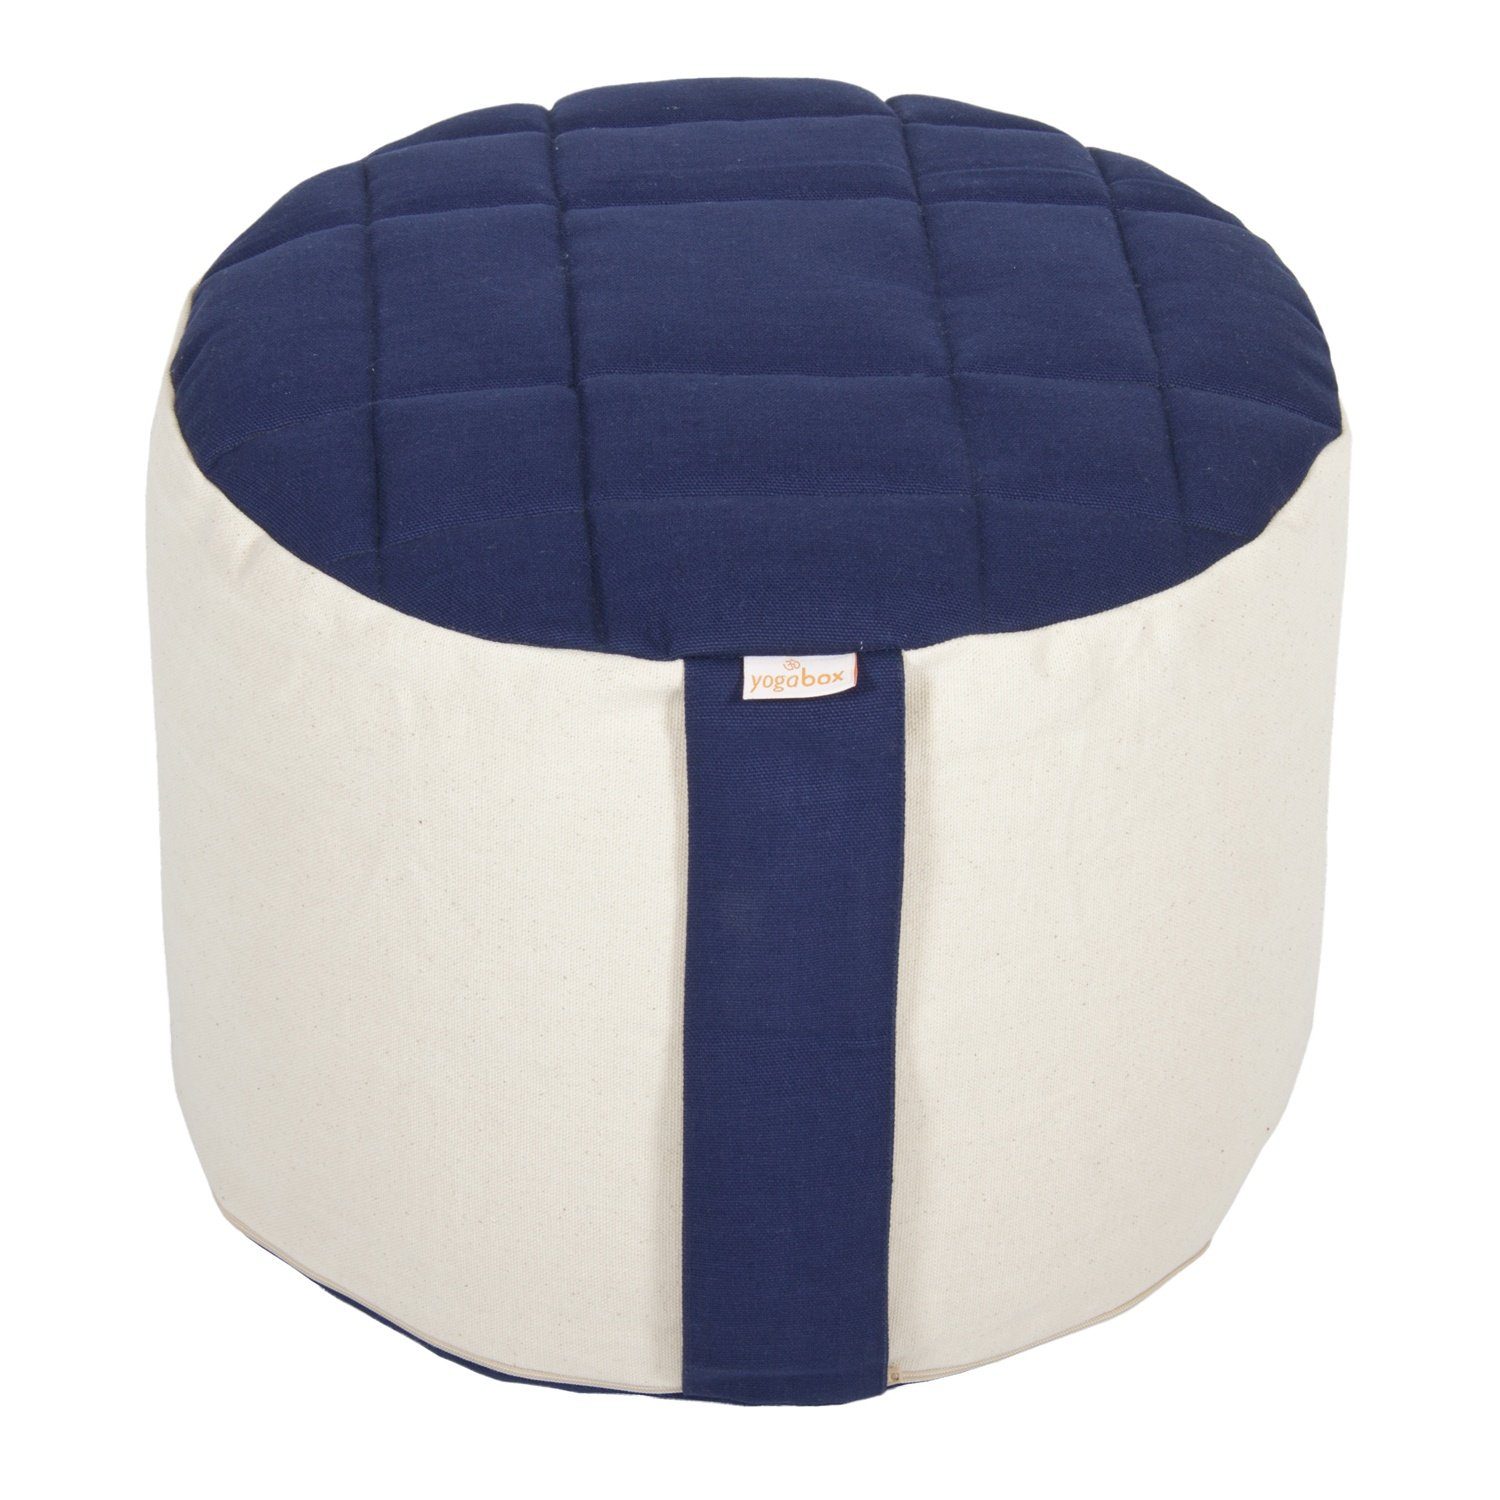 natur Rondo yogabox Big dunkelblau Sitzfläche bequeme Meditationskissen / Premium, extra Yogakissen